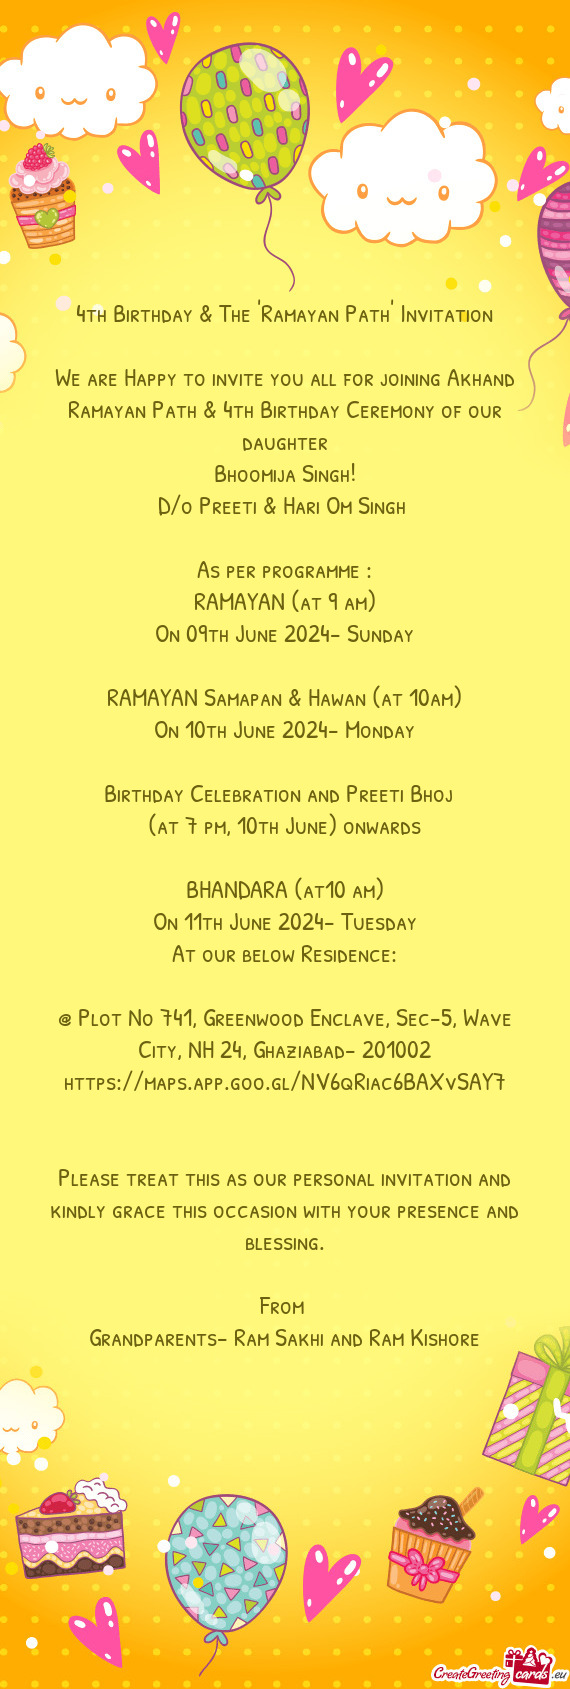 4th Birthday & The "Ramayan Path" Invitation